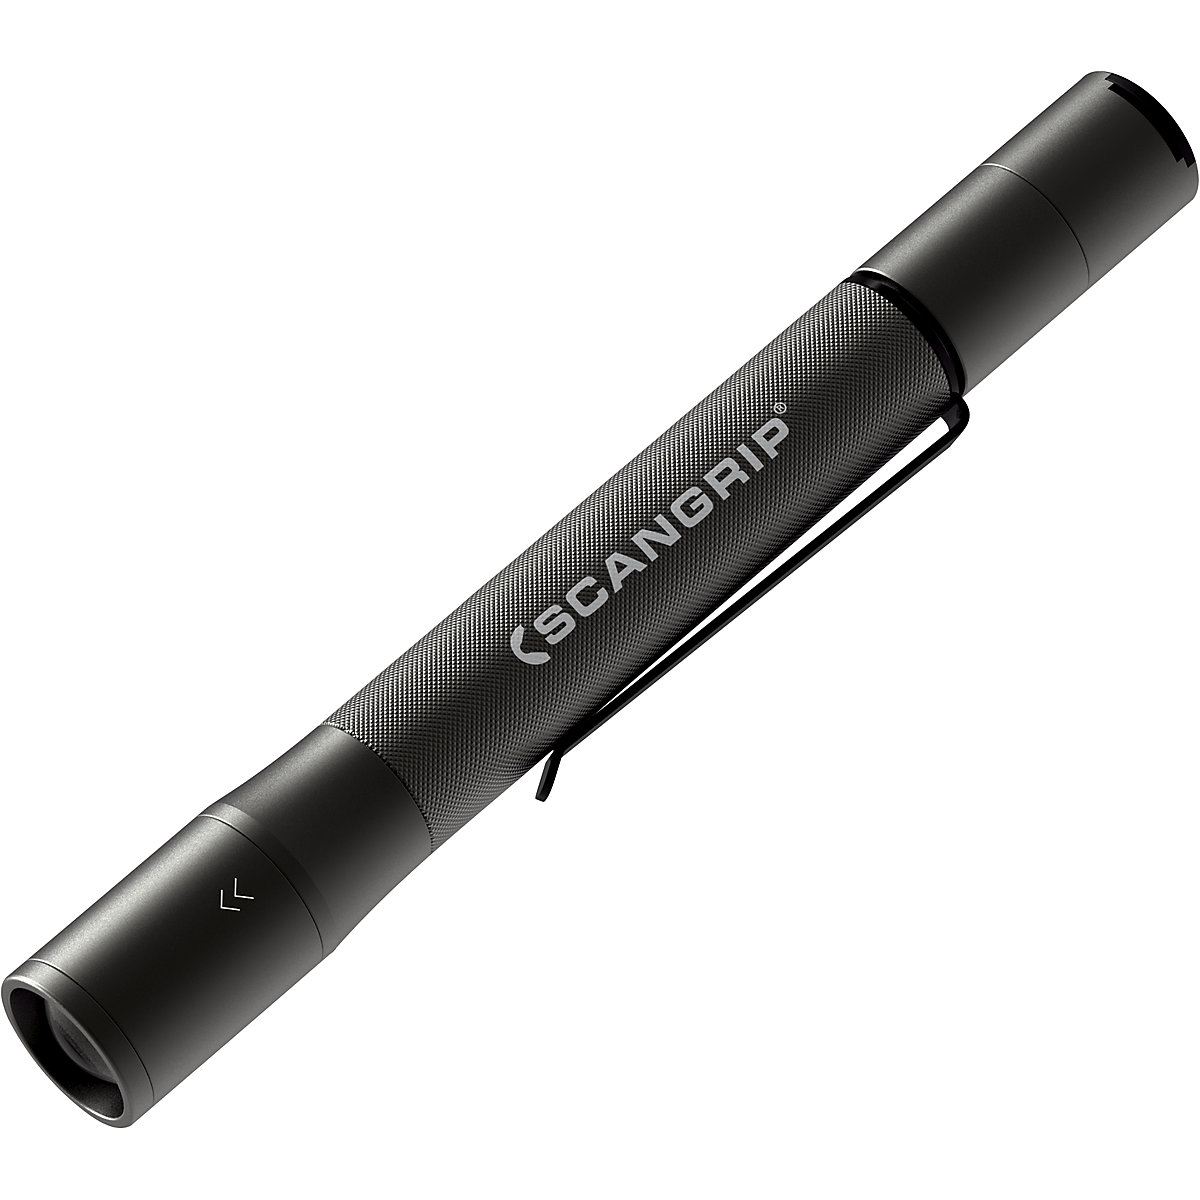 Akumulatorowa latarka długopisowa LED FLASH PEN R – SCANGRIP (Zdjęcie produktu 3)-2